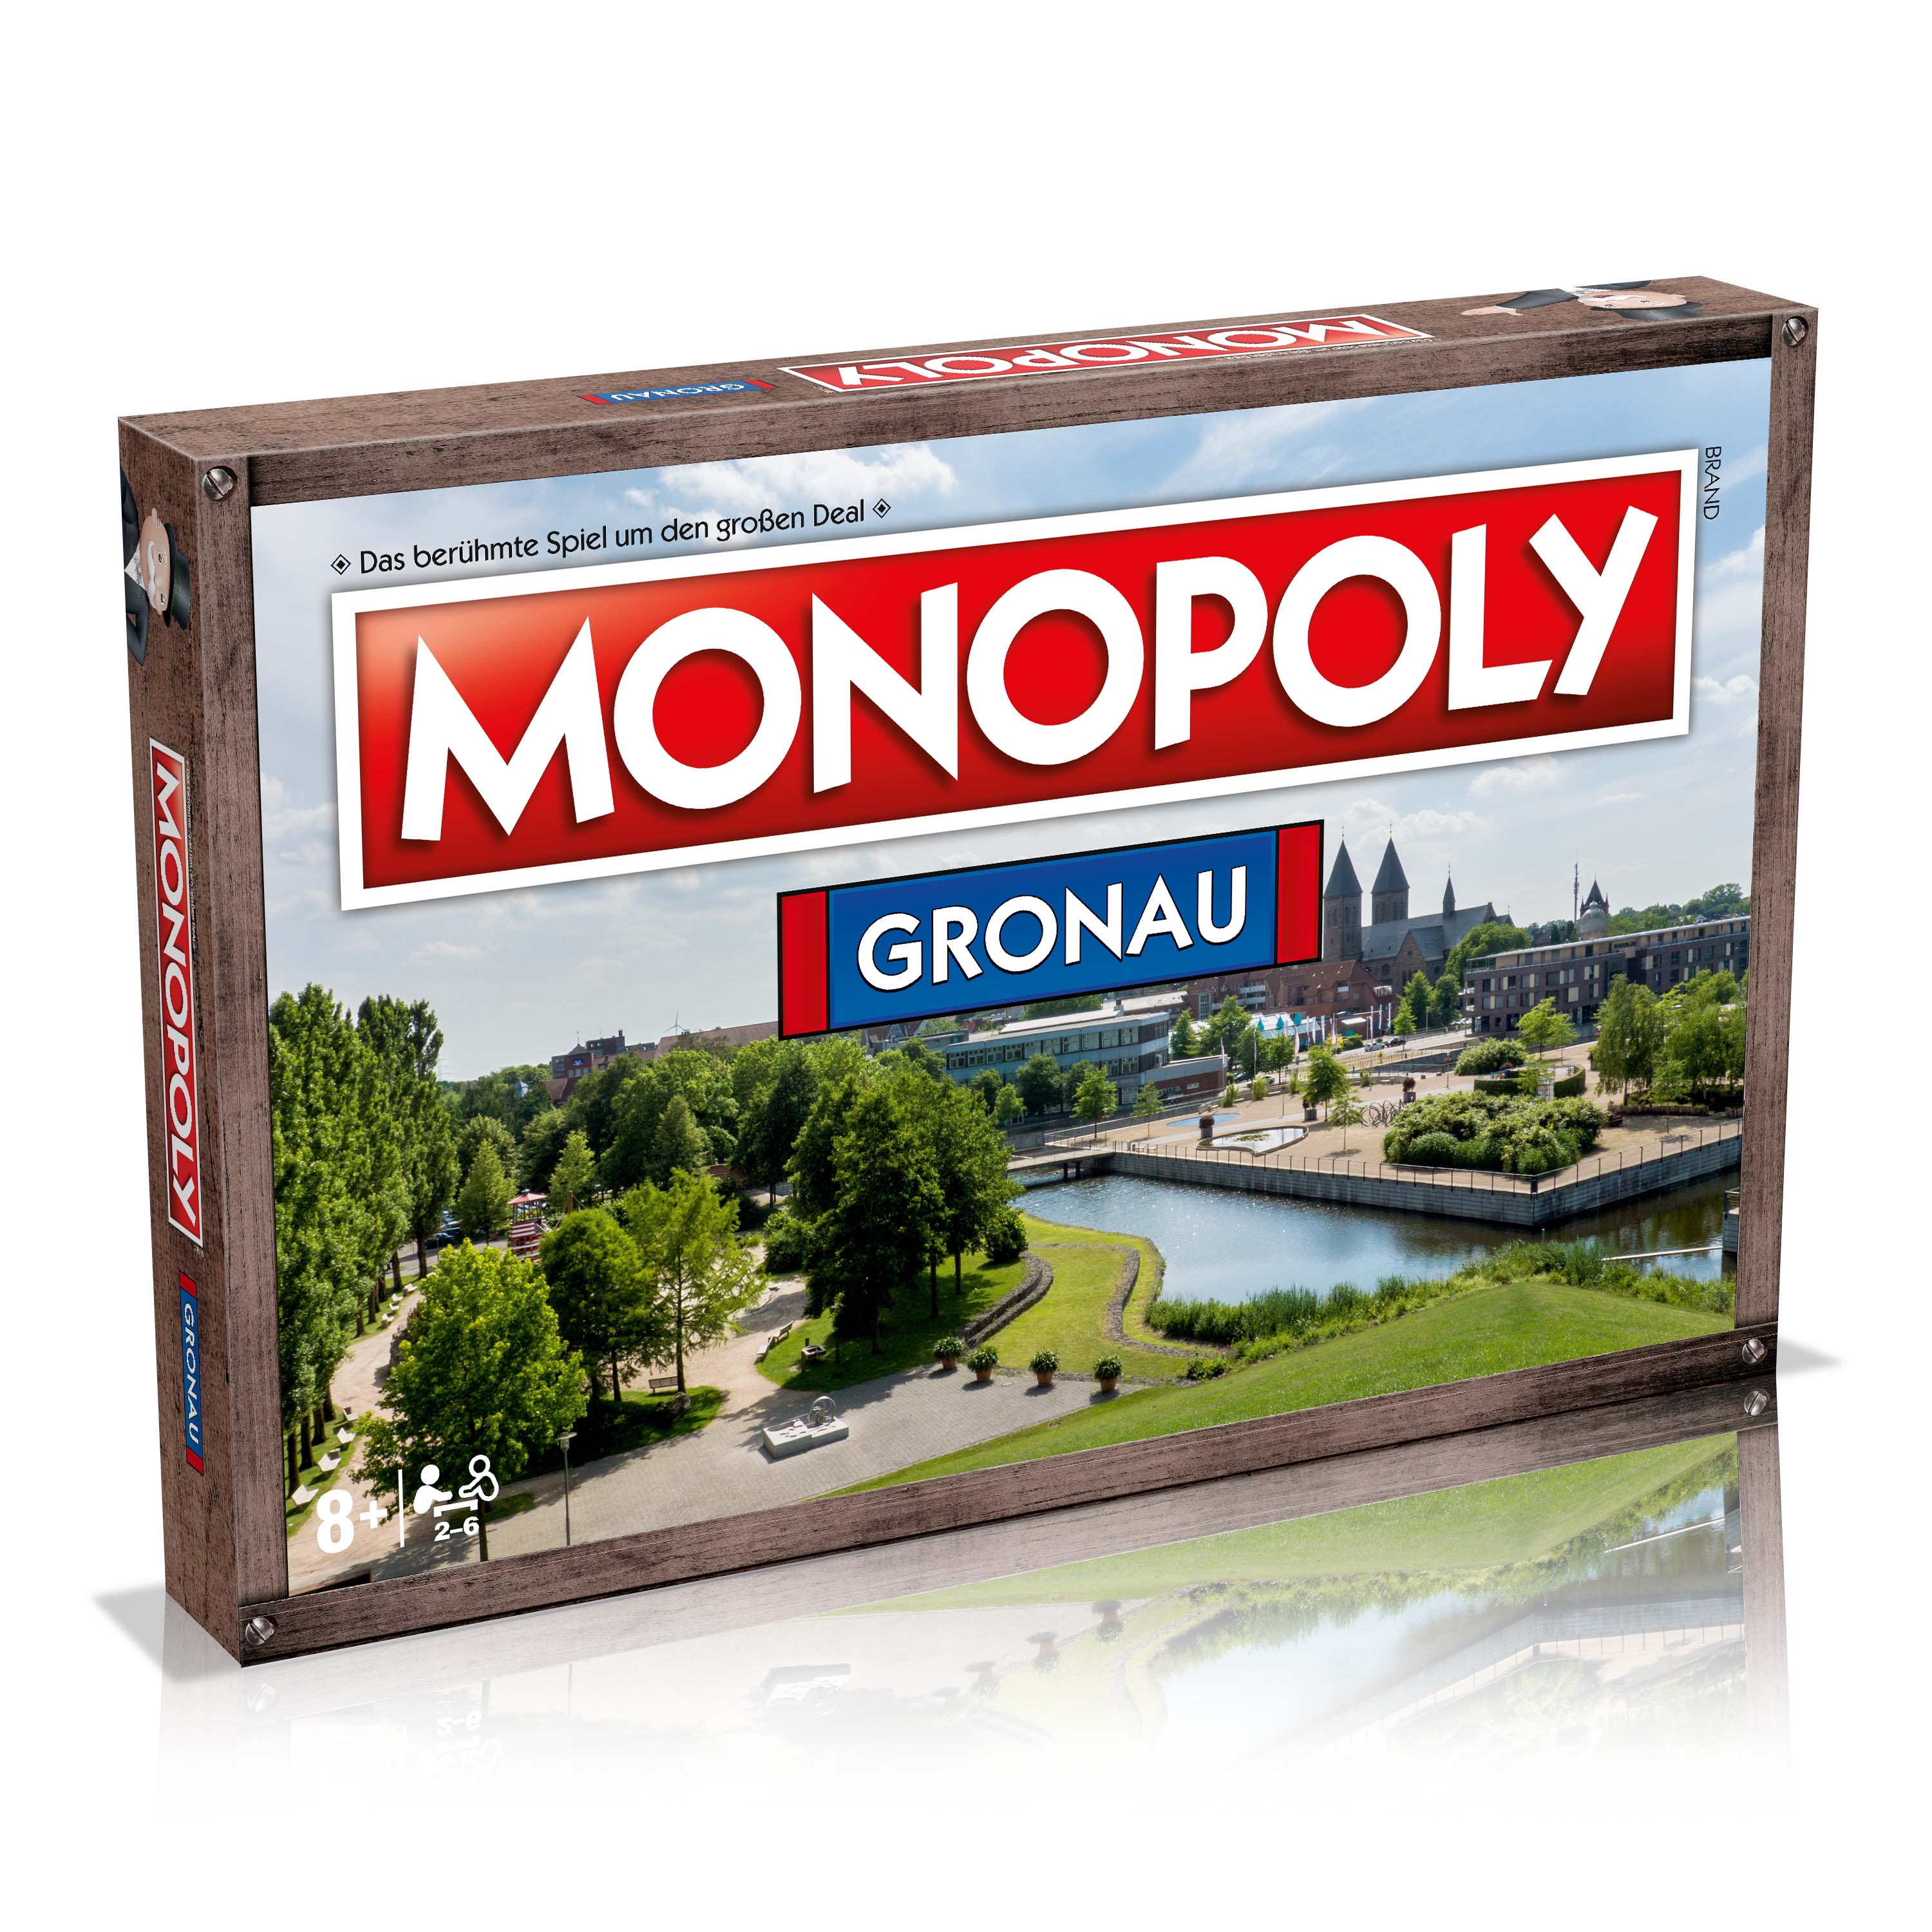 Monopoly - Gronau